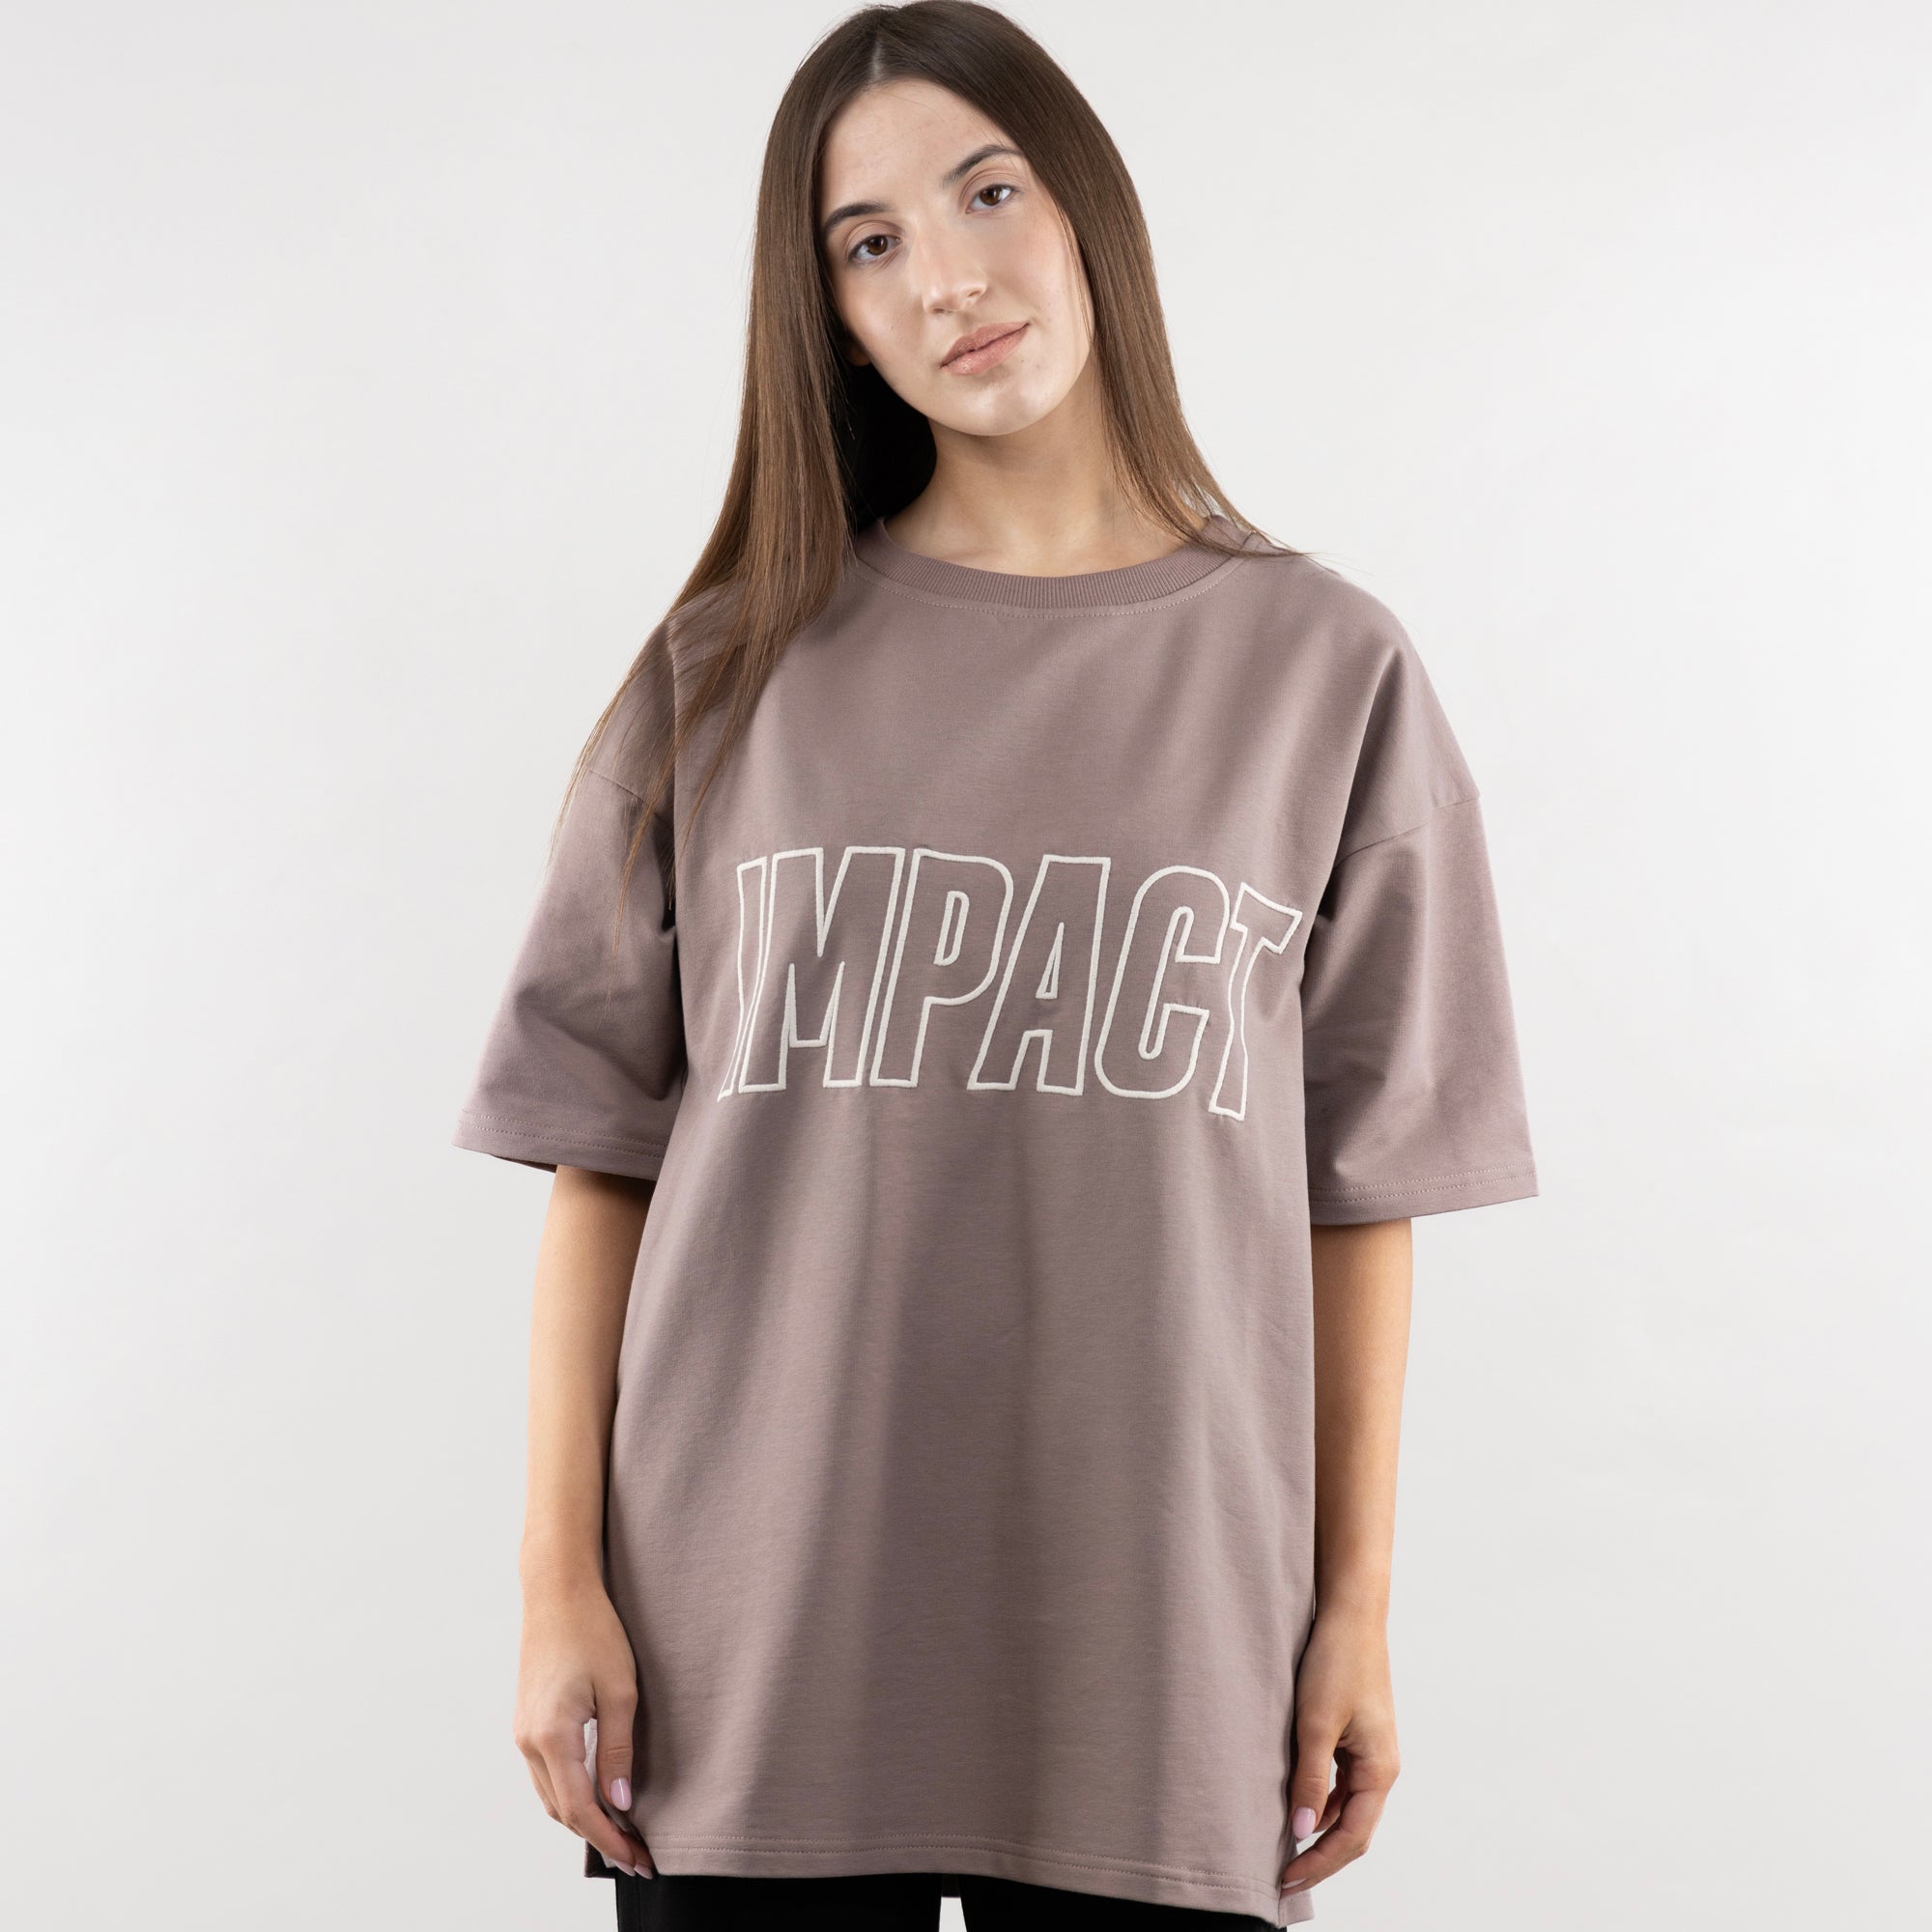 Oversize Basic T-Shirt "Impact" For Women